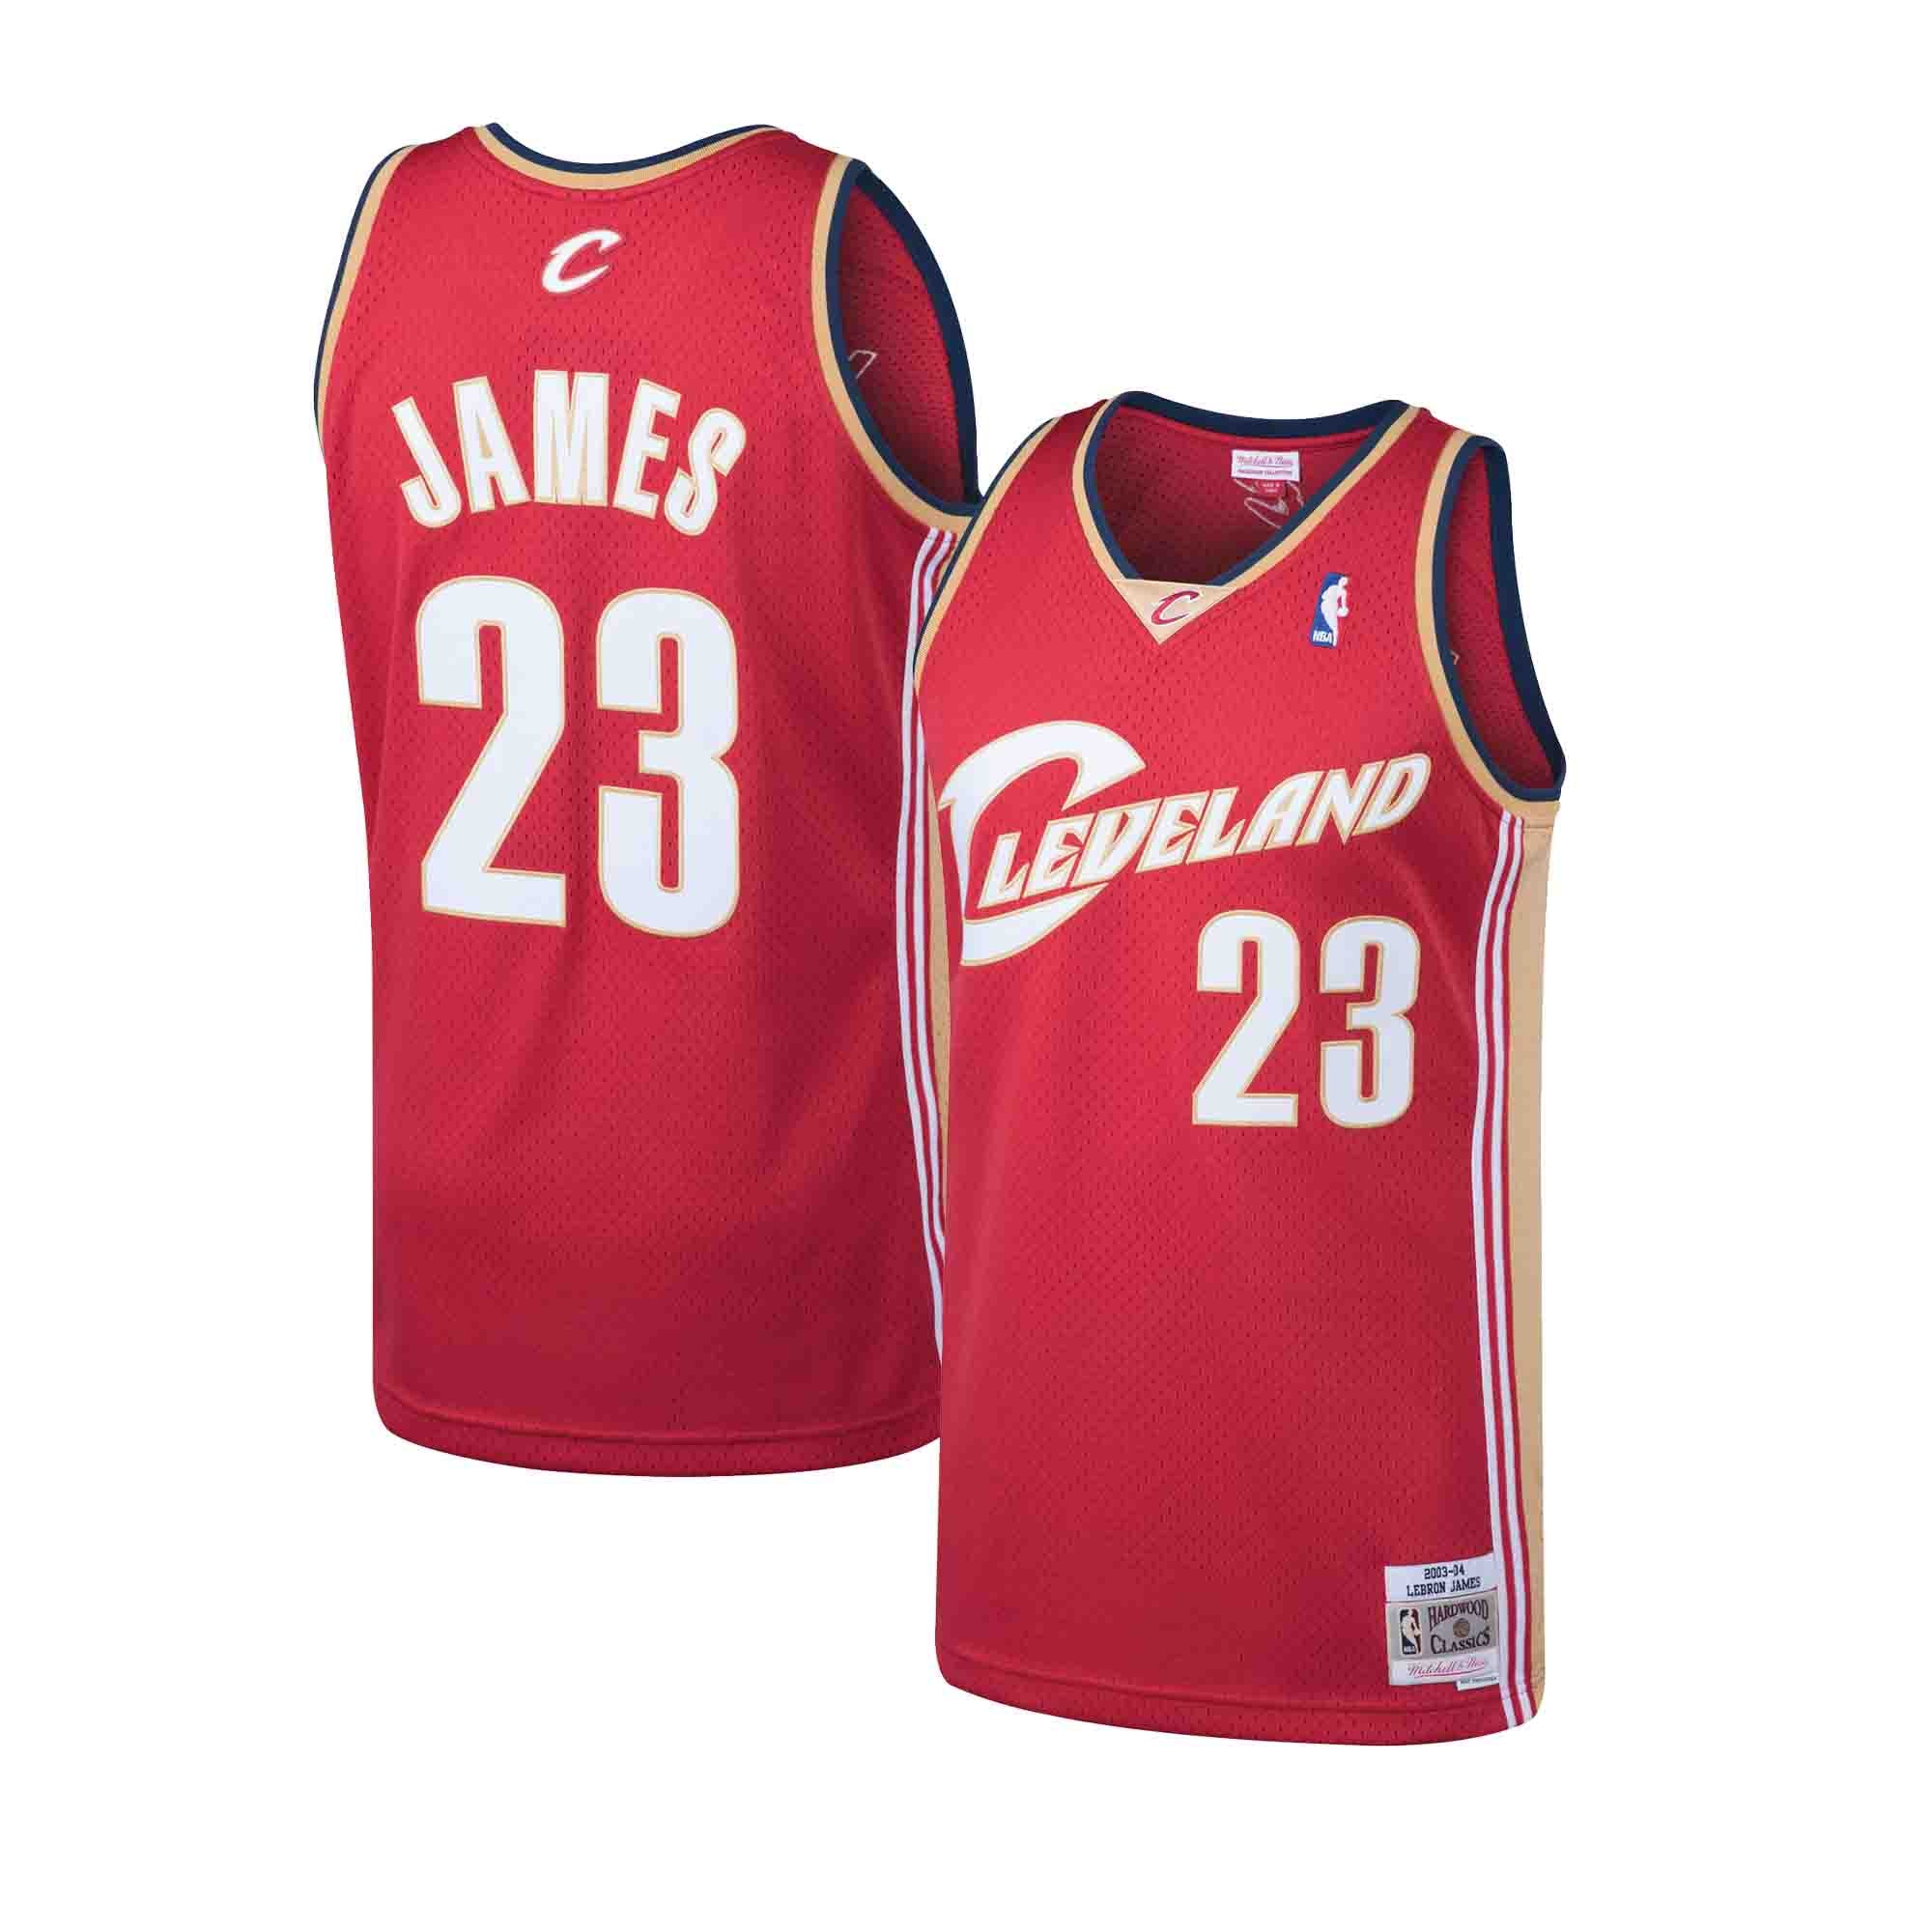 Lebron James Size NBA Kids Jersey Cleveland Cavaliers Adidas Cavs 23  #nbalebronjames #nbajerseys #lebronjames #lebron #lebrons #lebron23